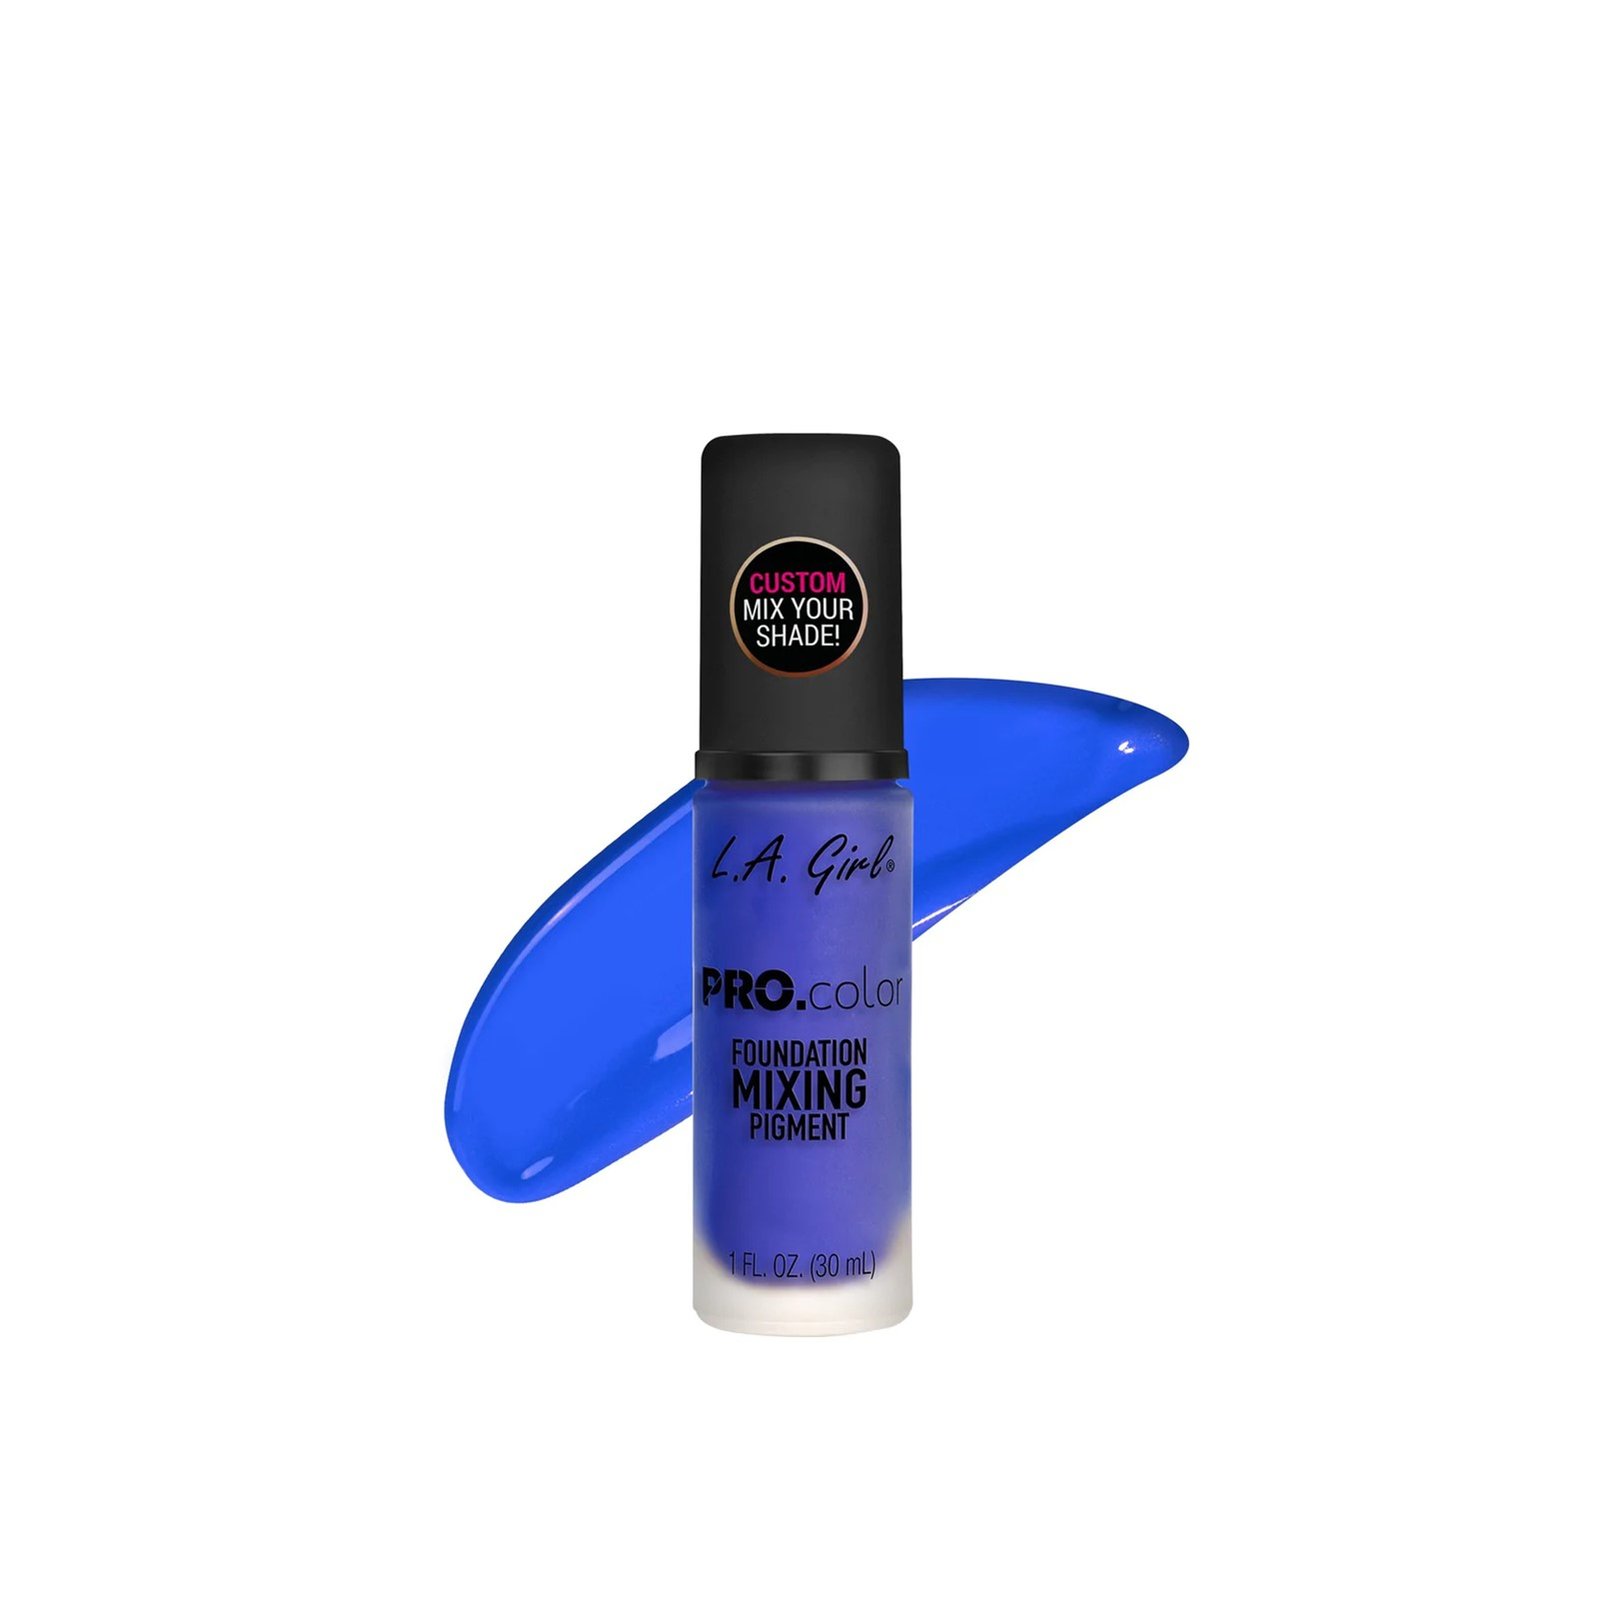 L.A. Girl Pro Color Foundation Mixing Pigment Blue 30ml (1.0 fl oz)